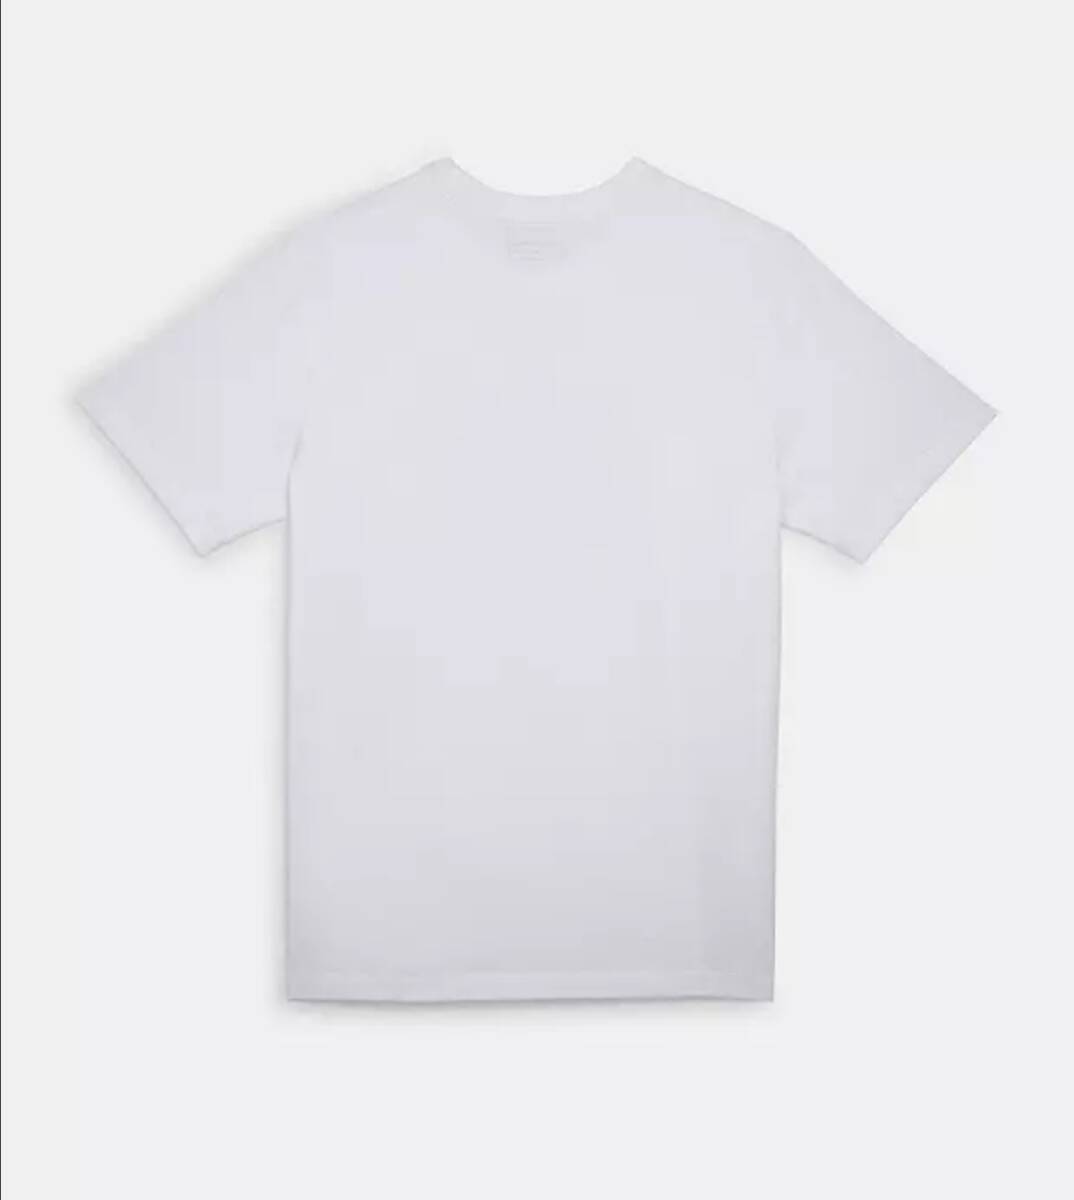 35200 jpy * new goods & regular goods guarantee * Coach COACH* signature * white T-shirt M*C9140